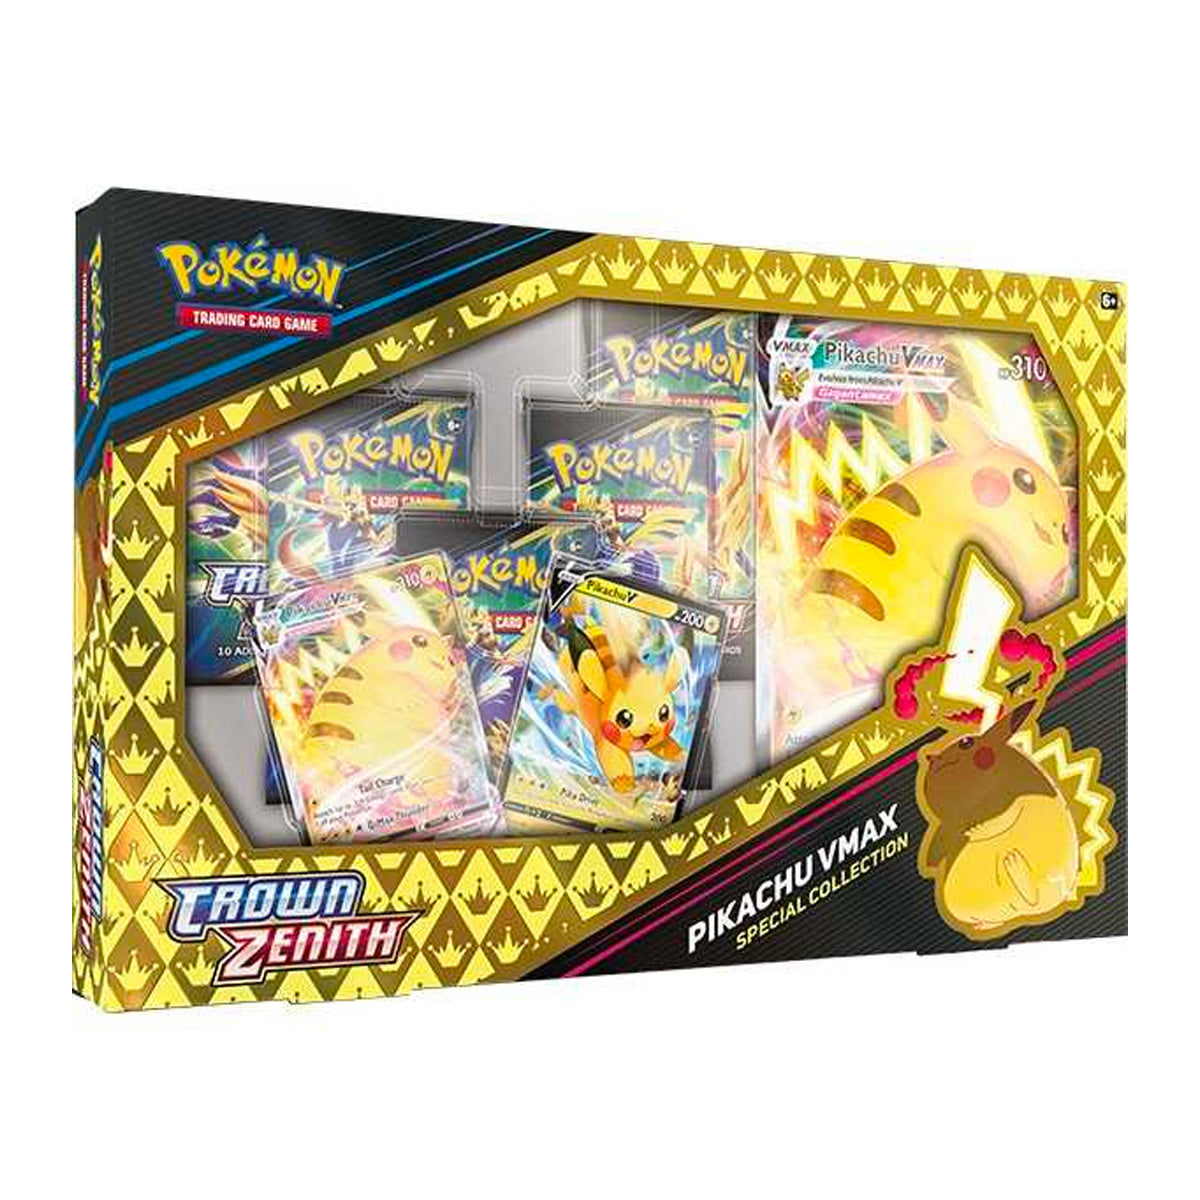 Pokémon TCG: Crown Zenith Special Collection (Pikachu VMax)